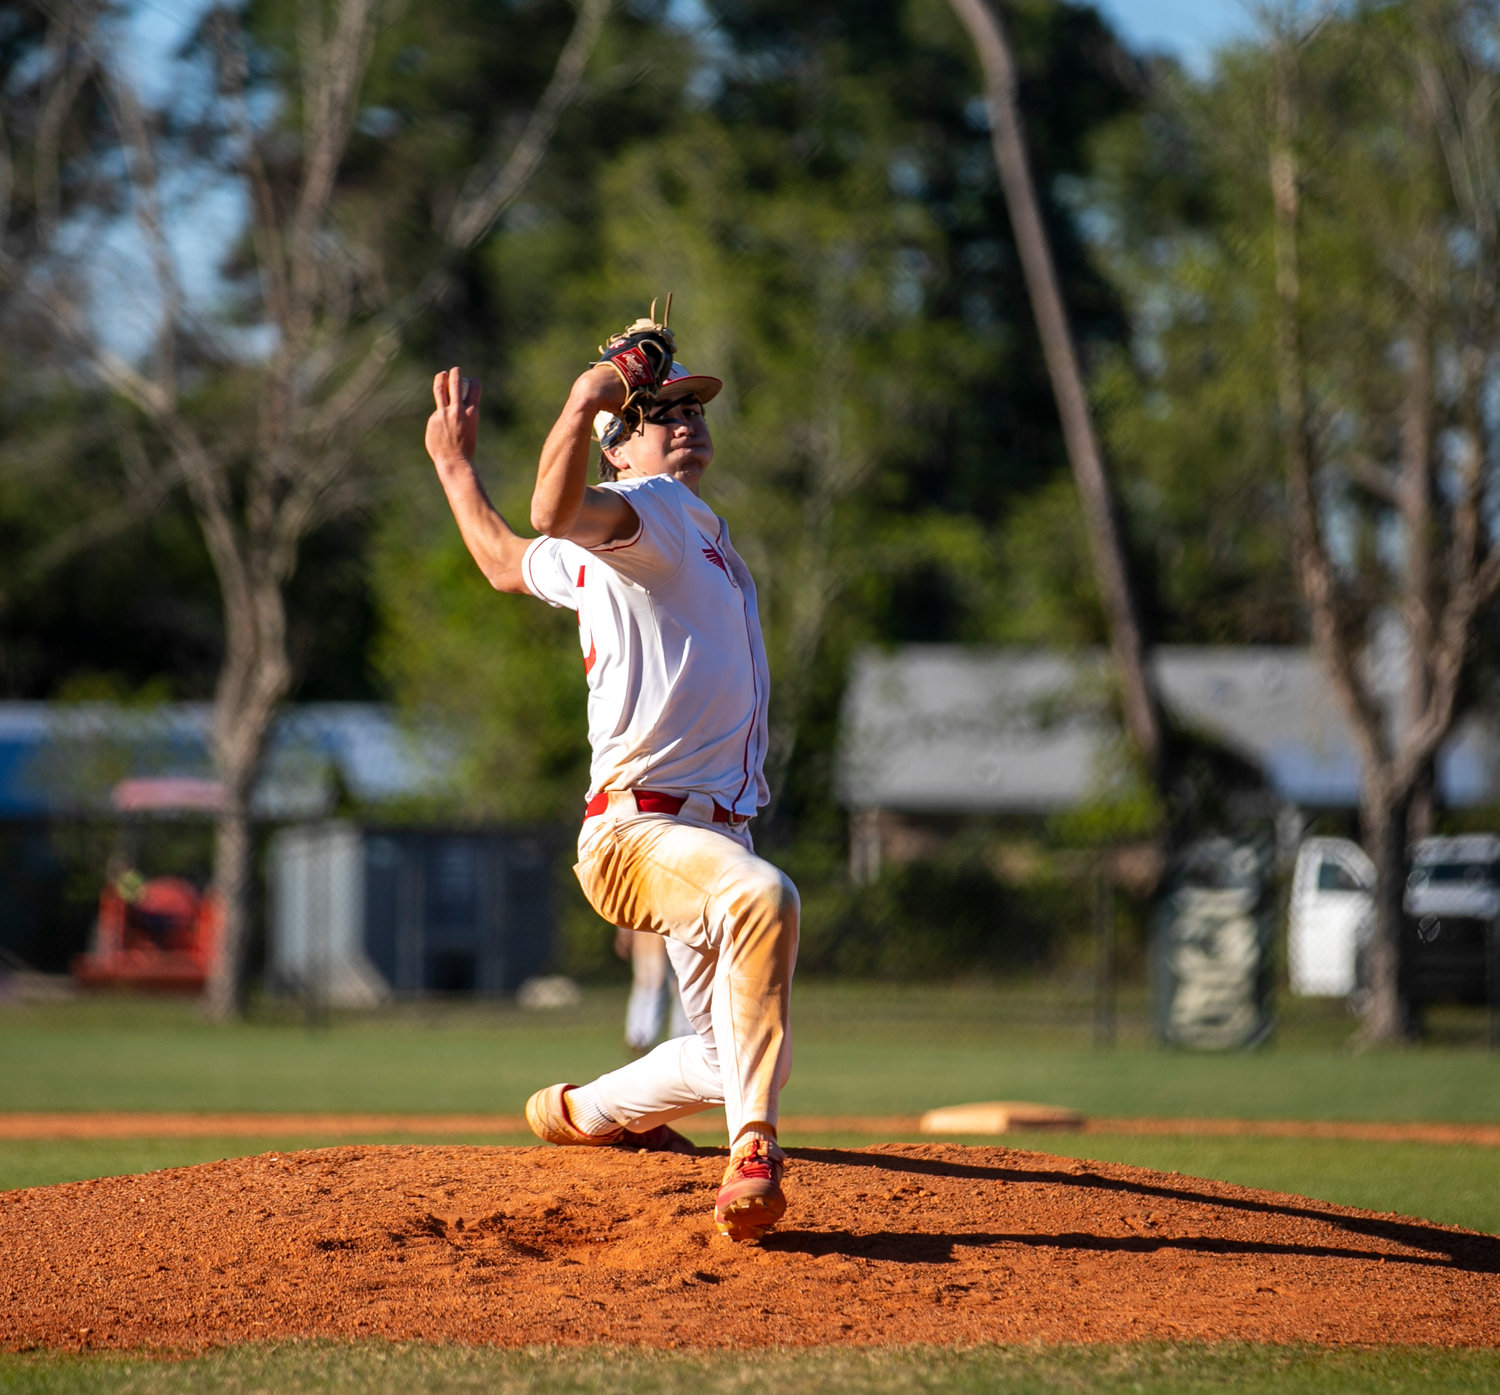 Gulf Coast Classic kicks off baseball, softball tournament season in